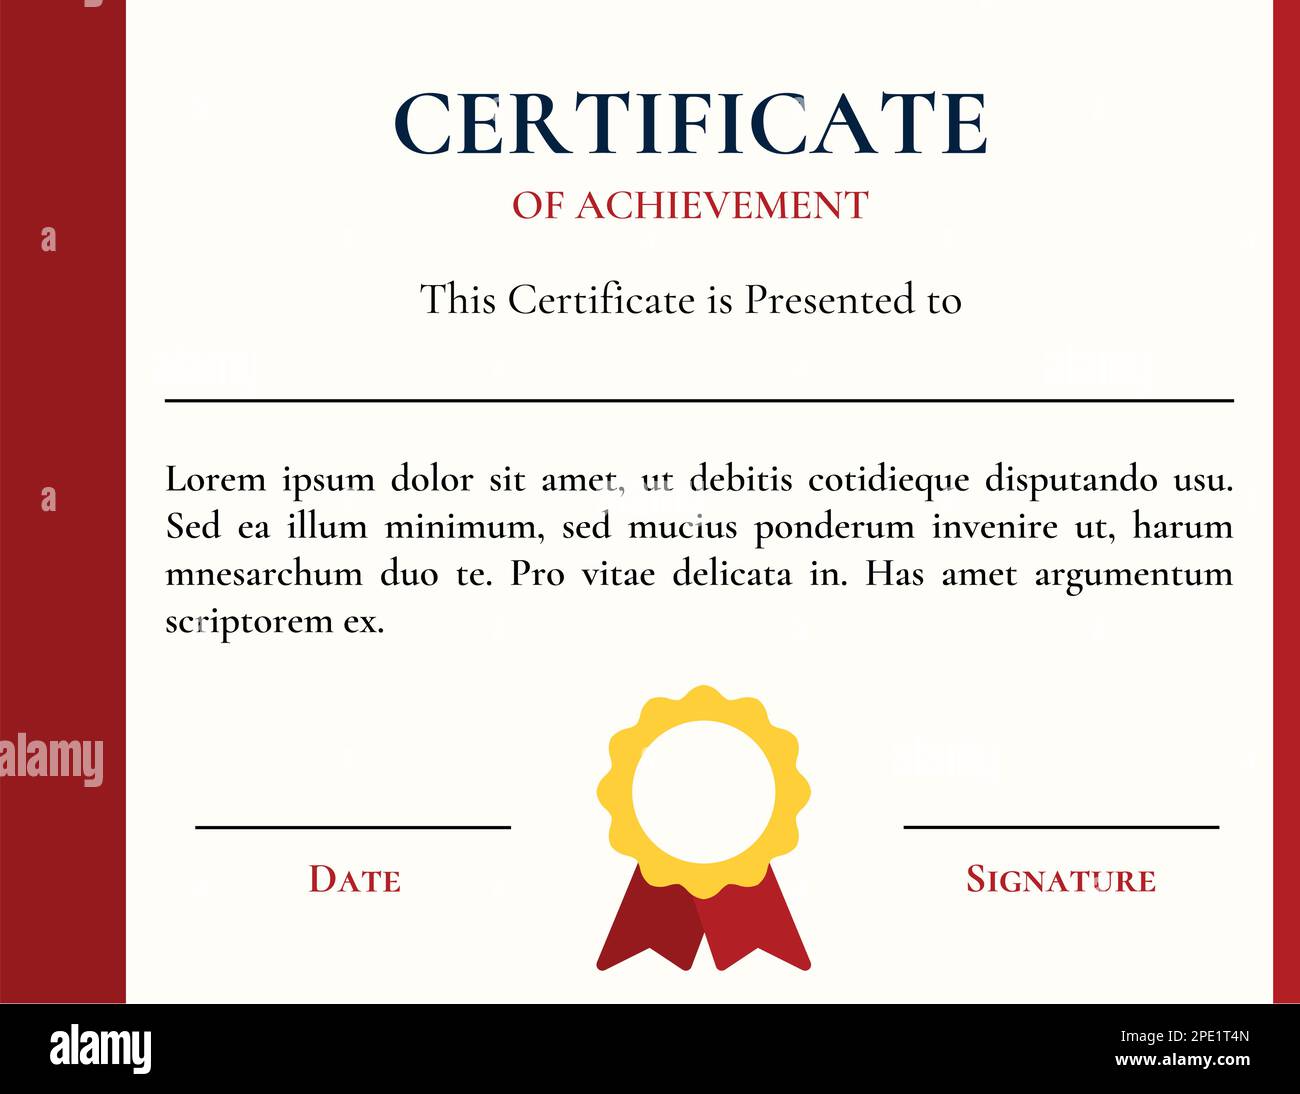 Certificate of achievement vector template, diploma border ornate